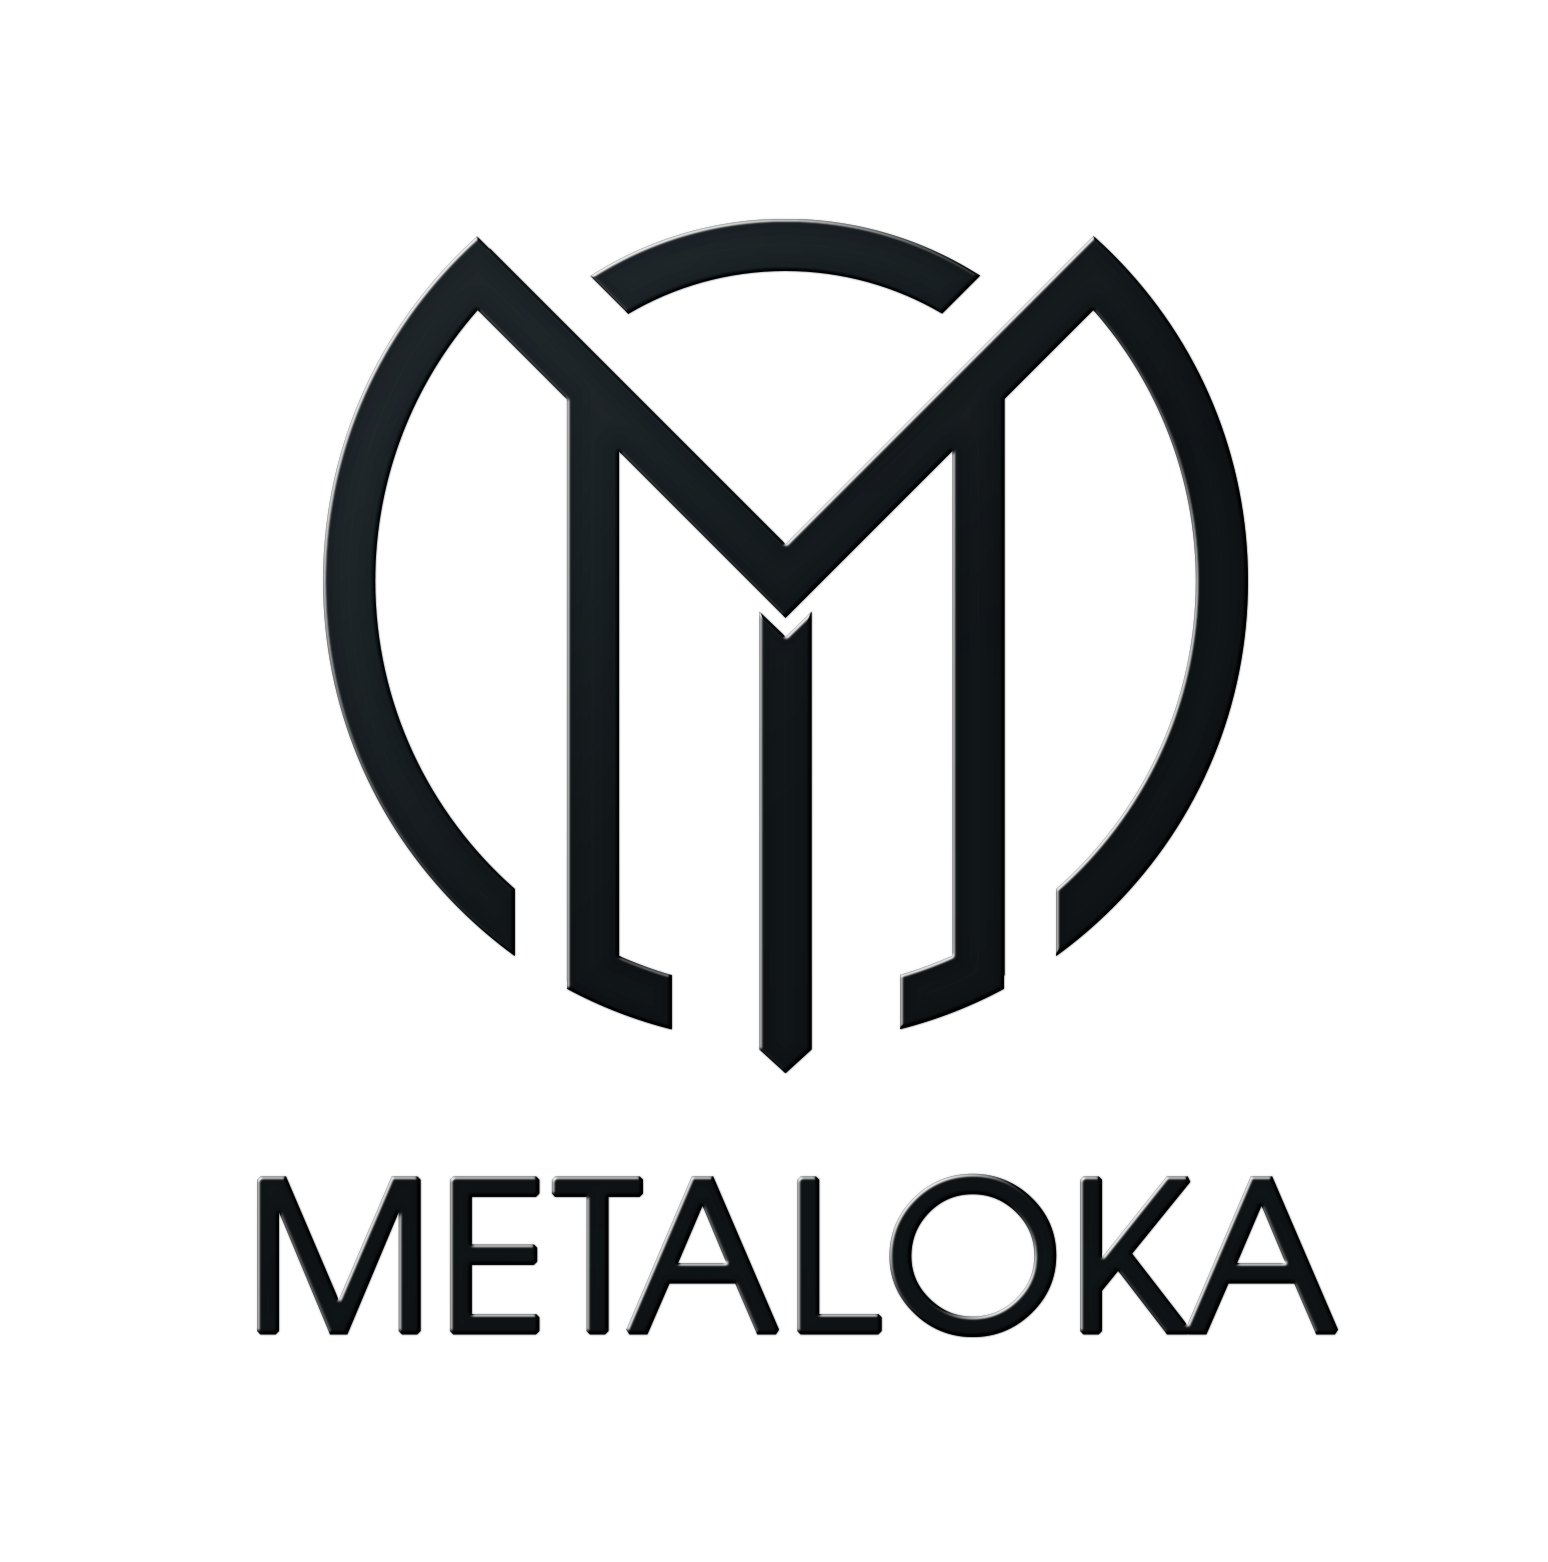 MetaLoka Acquires Leading Crypto Visionary ‘Bitcoin Man’ Herbert Sim as an Investor and Advisor